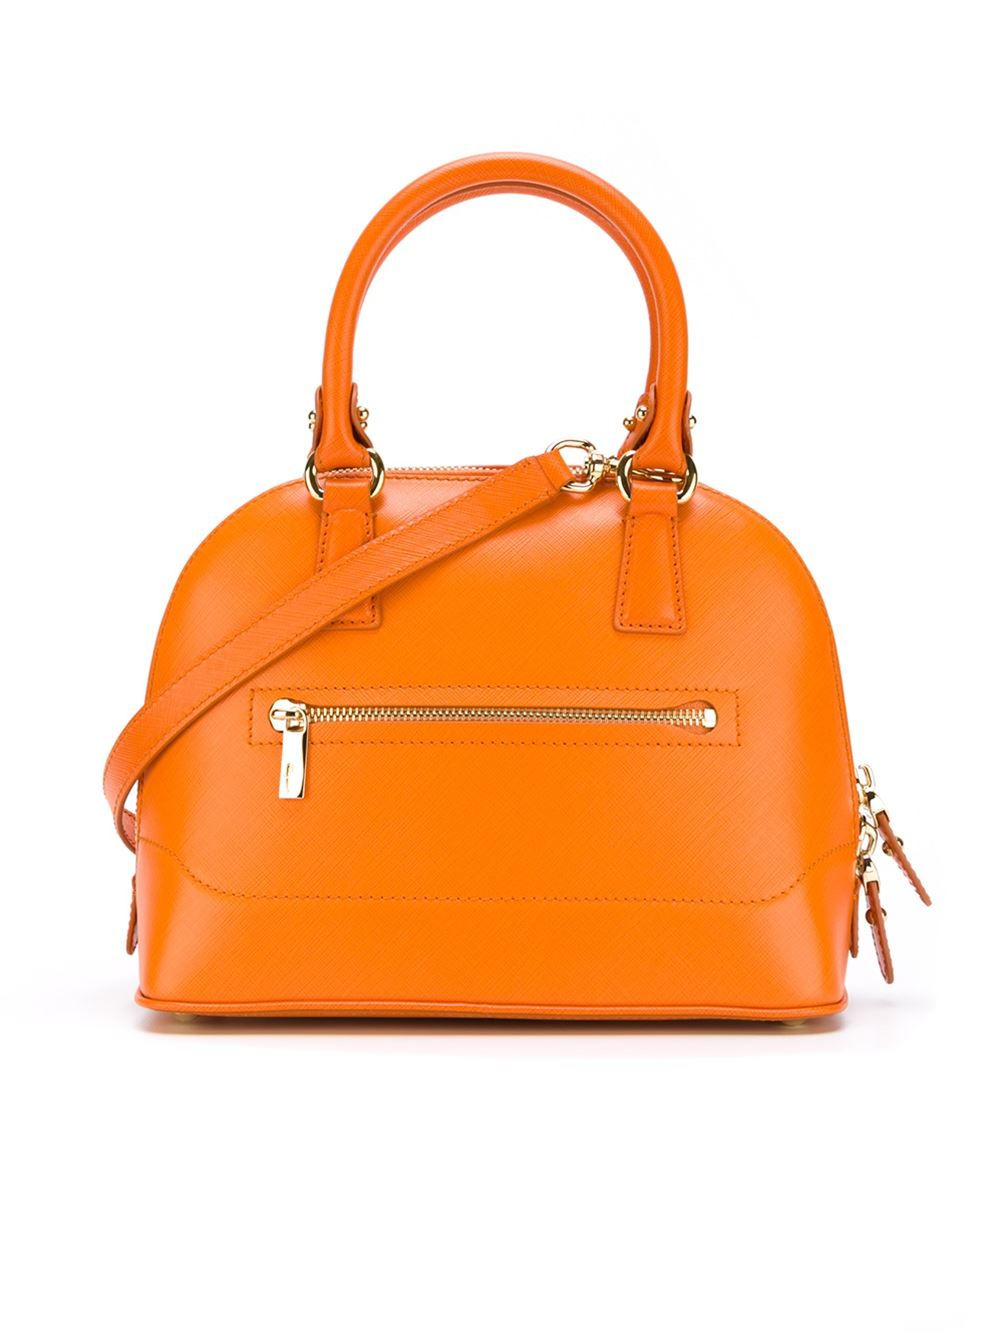 Ferragamo Darina Bag in Orange | Lyst